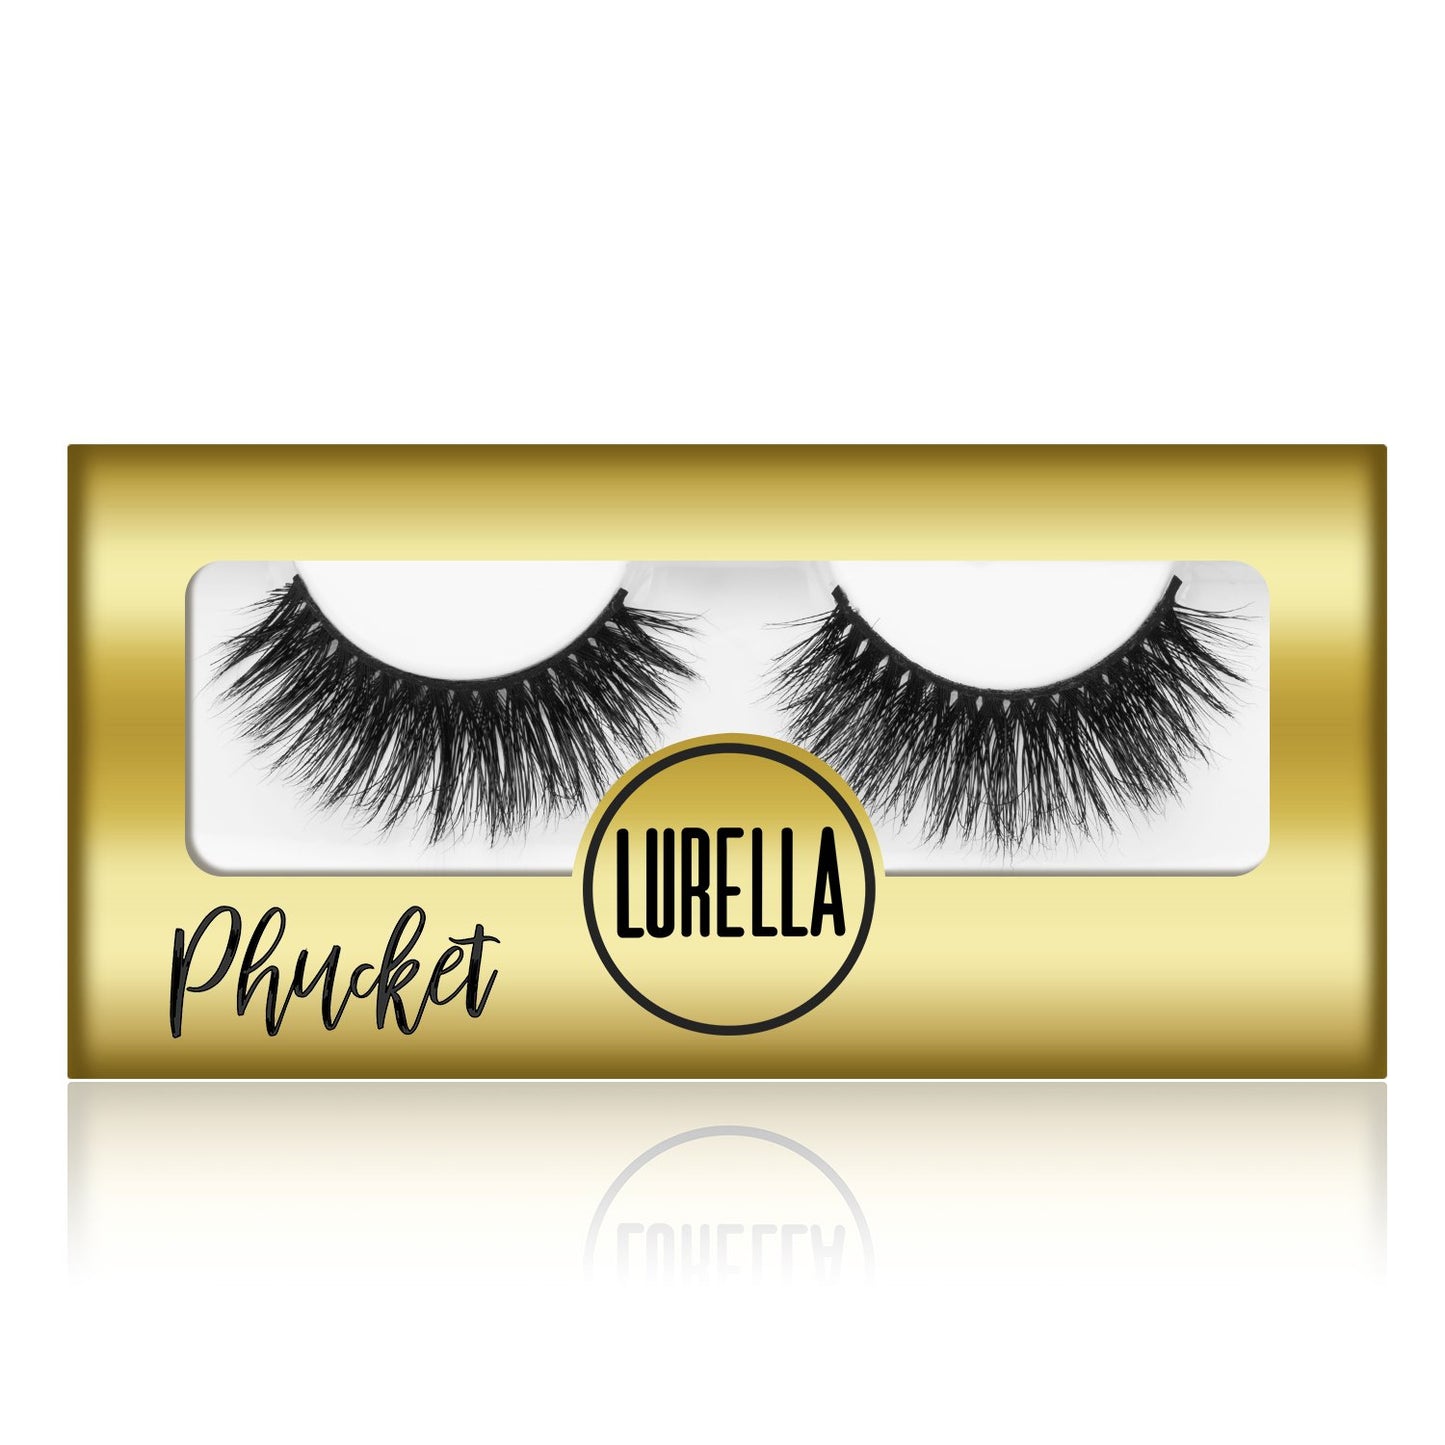 Phucket - Lurella Cosmetics